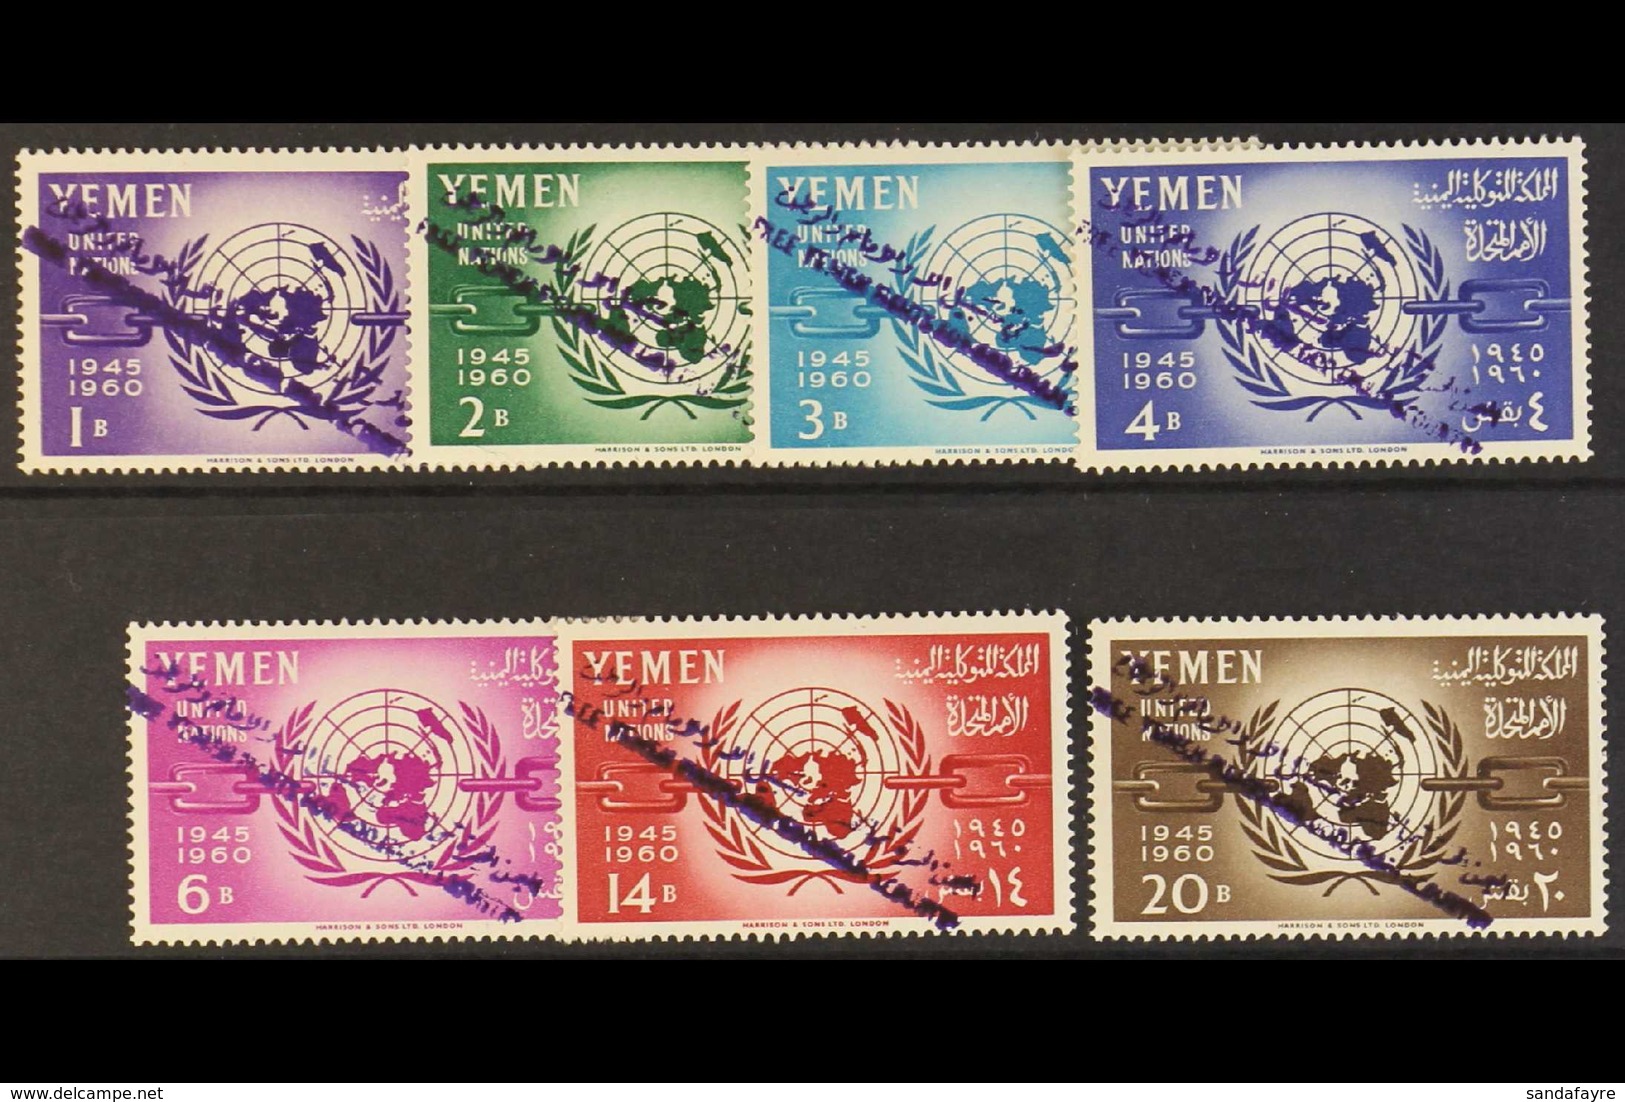 ROYALIST CIVIL WAR ISSUES 1964 17th Anniv Of UN Set Ovptd "Free Yemen Fights For God Etc" 2 Lines In Violet, Variety IMP - Jemen